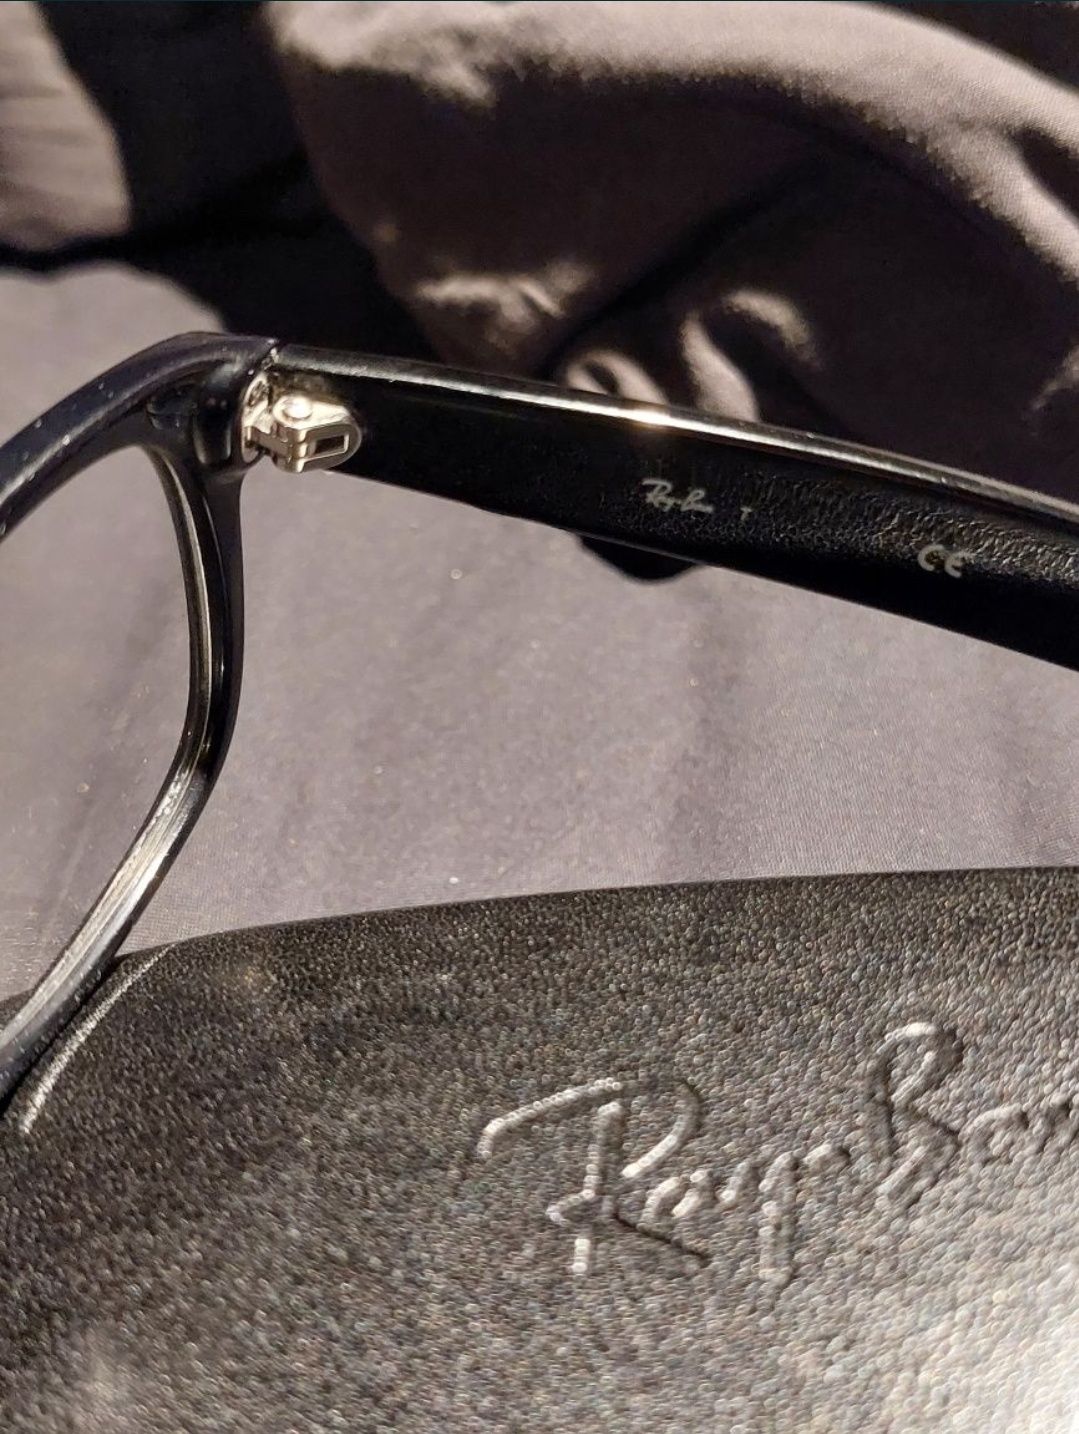 RAY BAN okulary oprawki czarne model 5184 unisex NOWE 600 PLN black